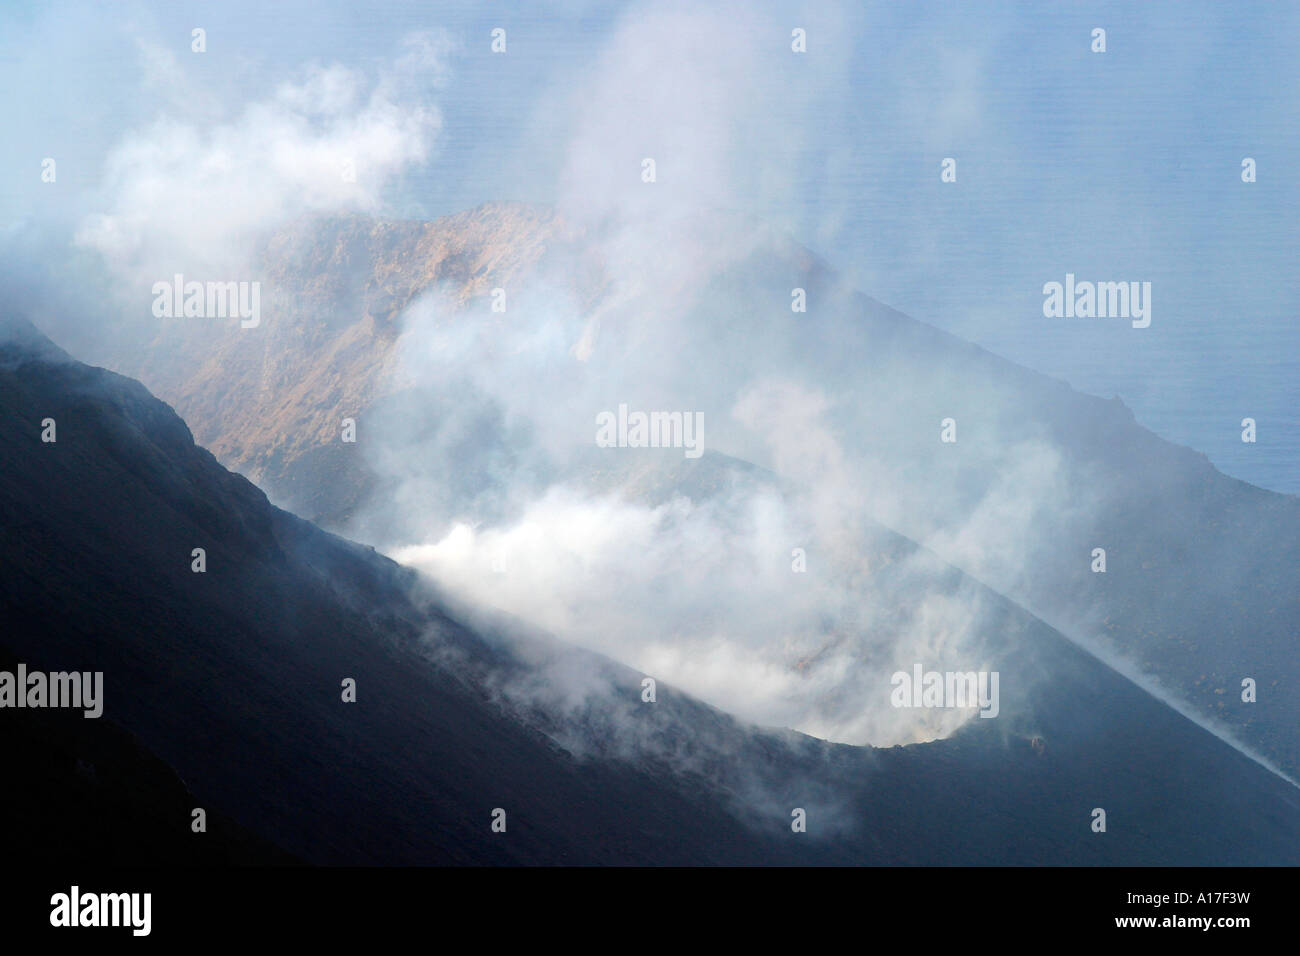 Erupting Volcano, Stromboli, Italy. Stock Photo